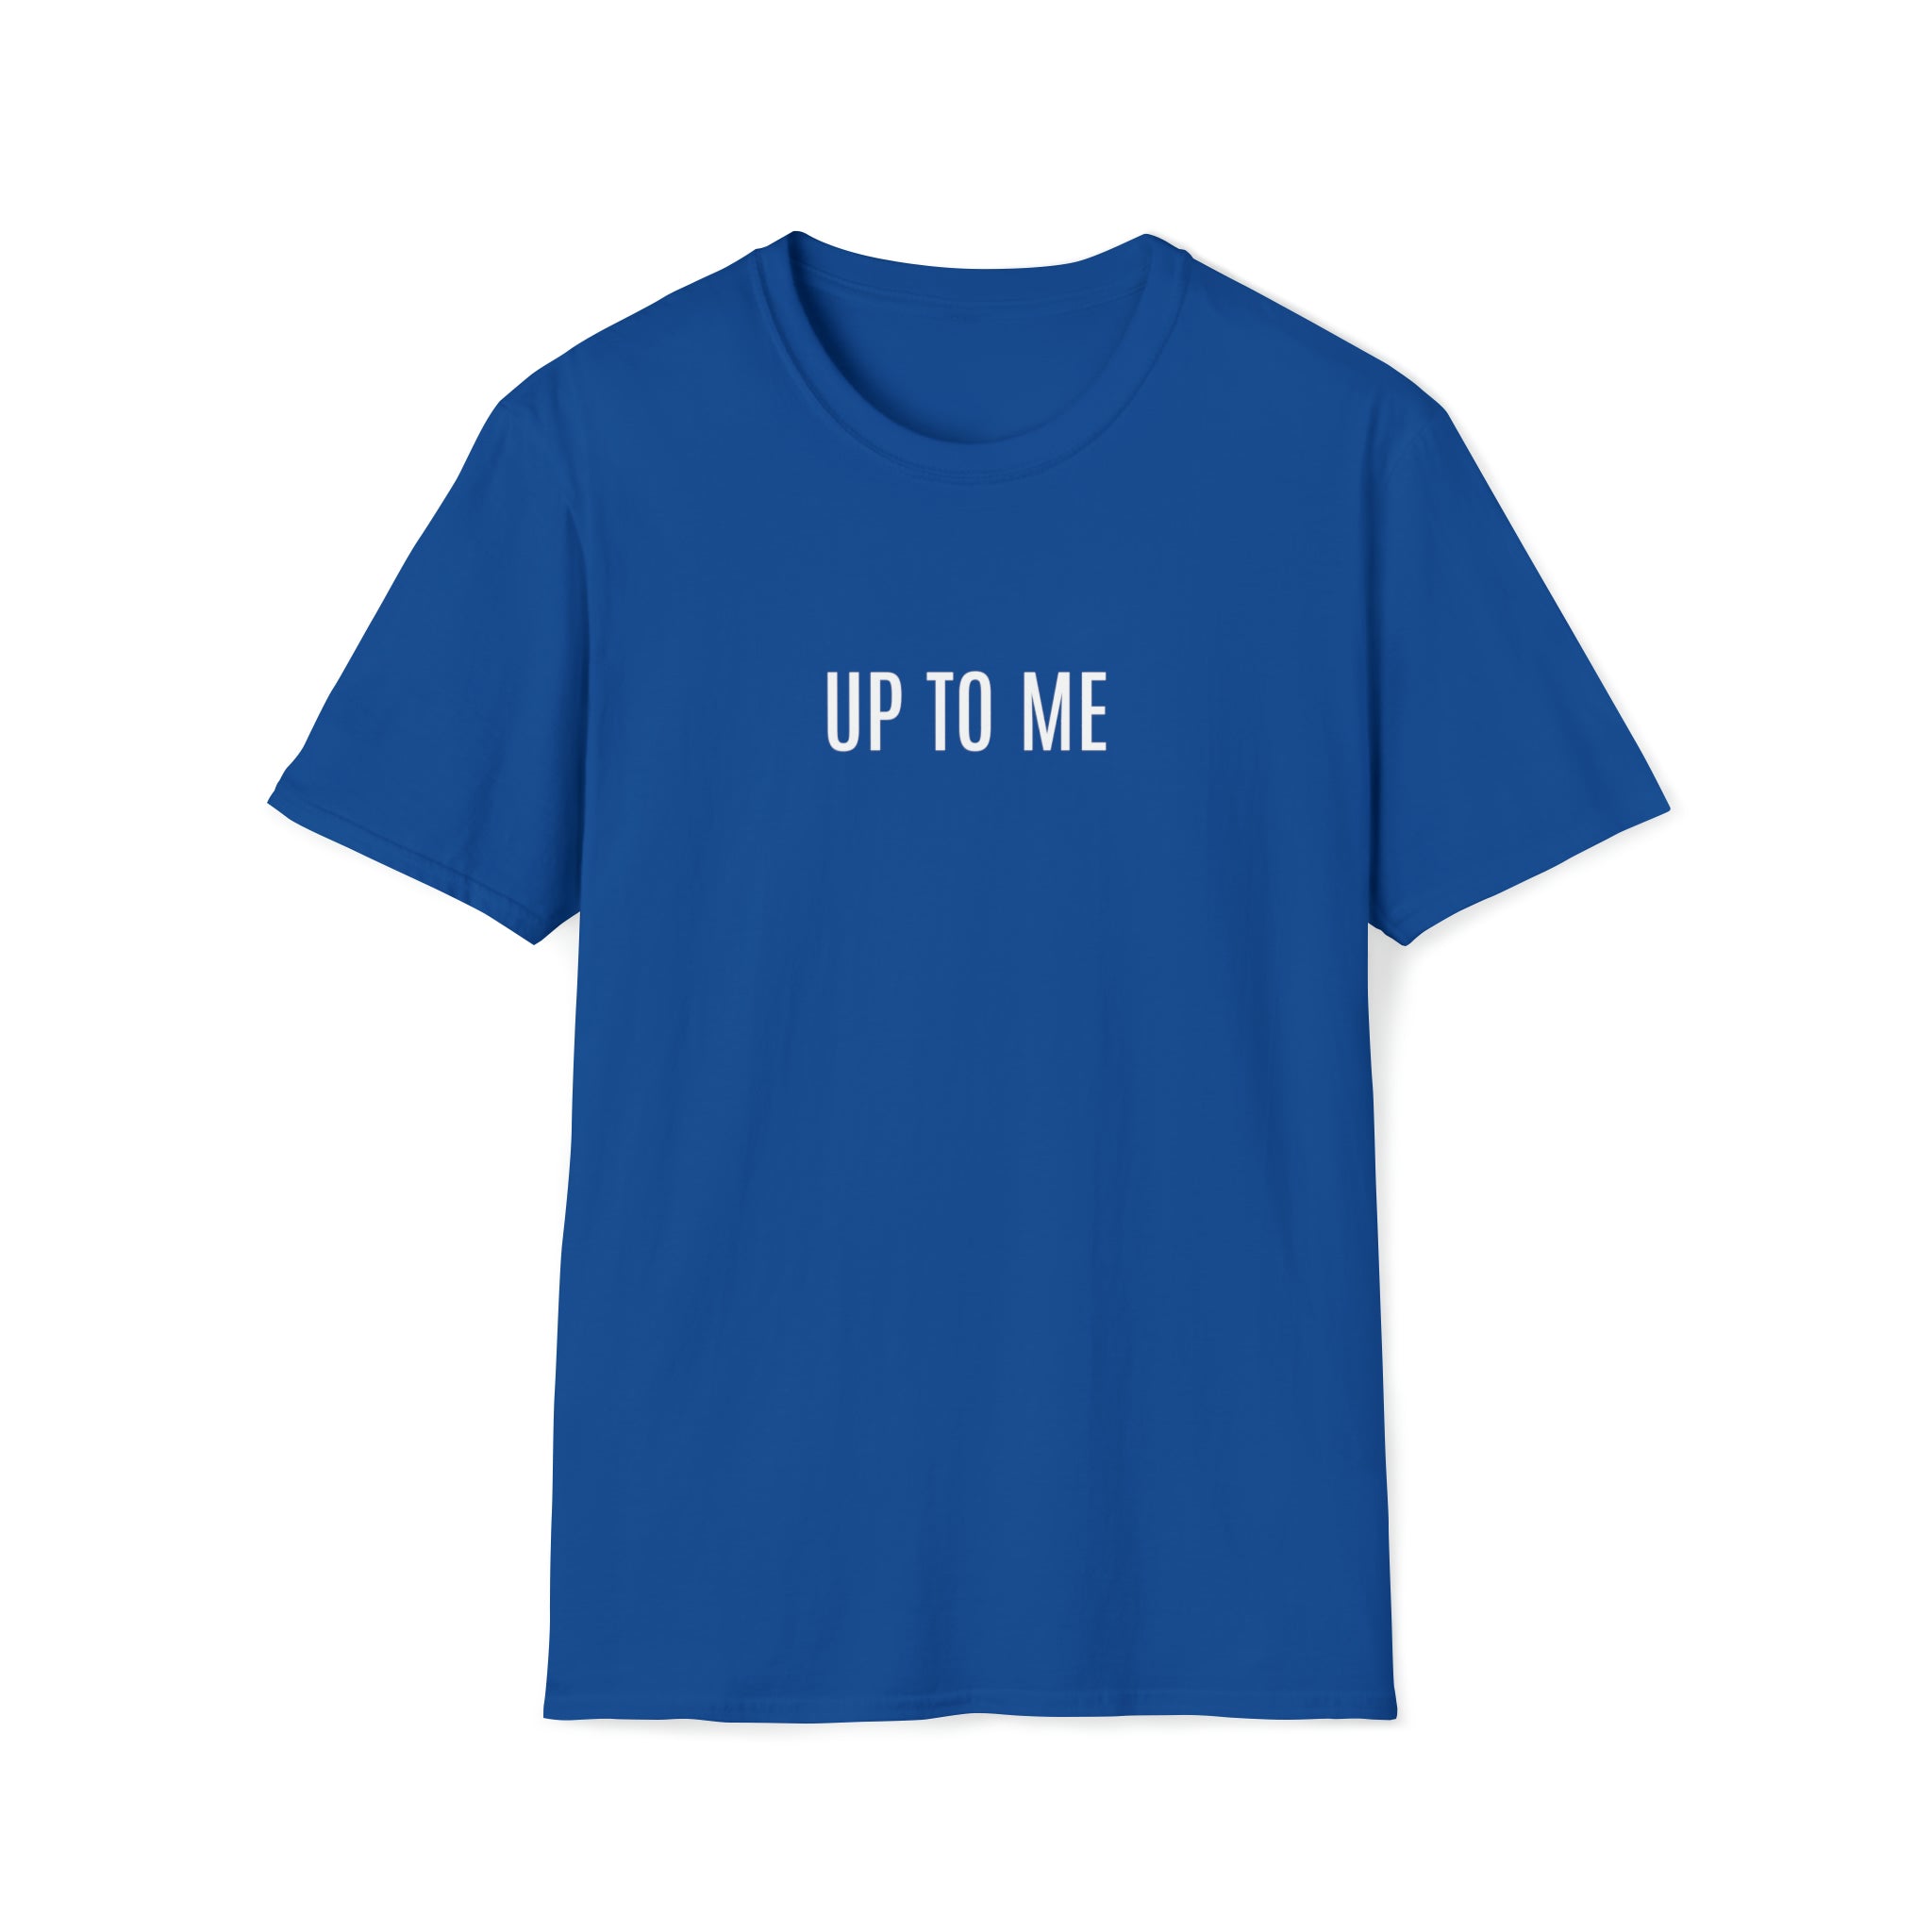 Up to me T-Shirt